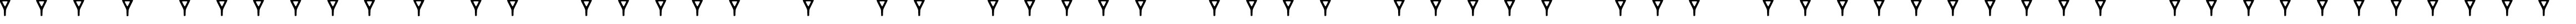 Пример написания шрифтом RK Ugaritic текста на украинском